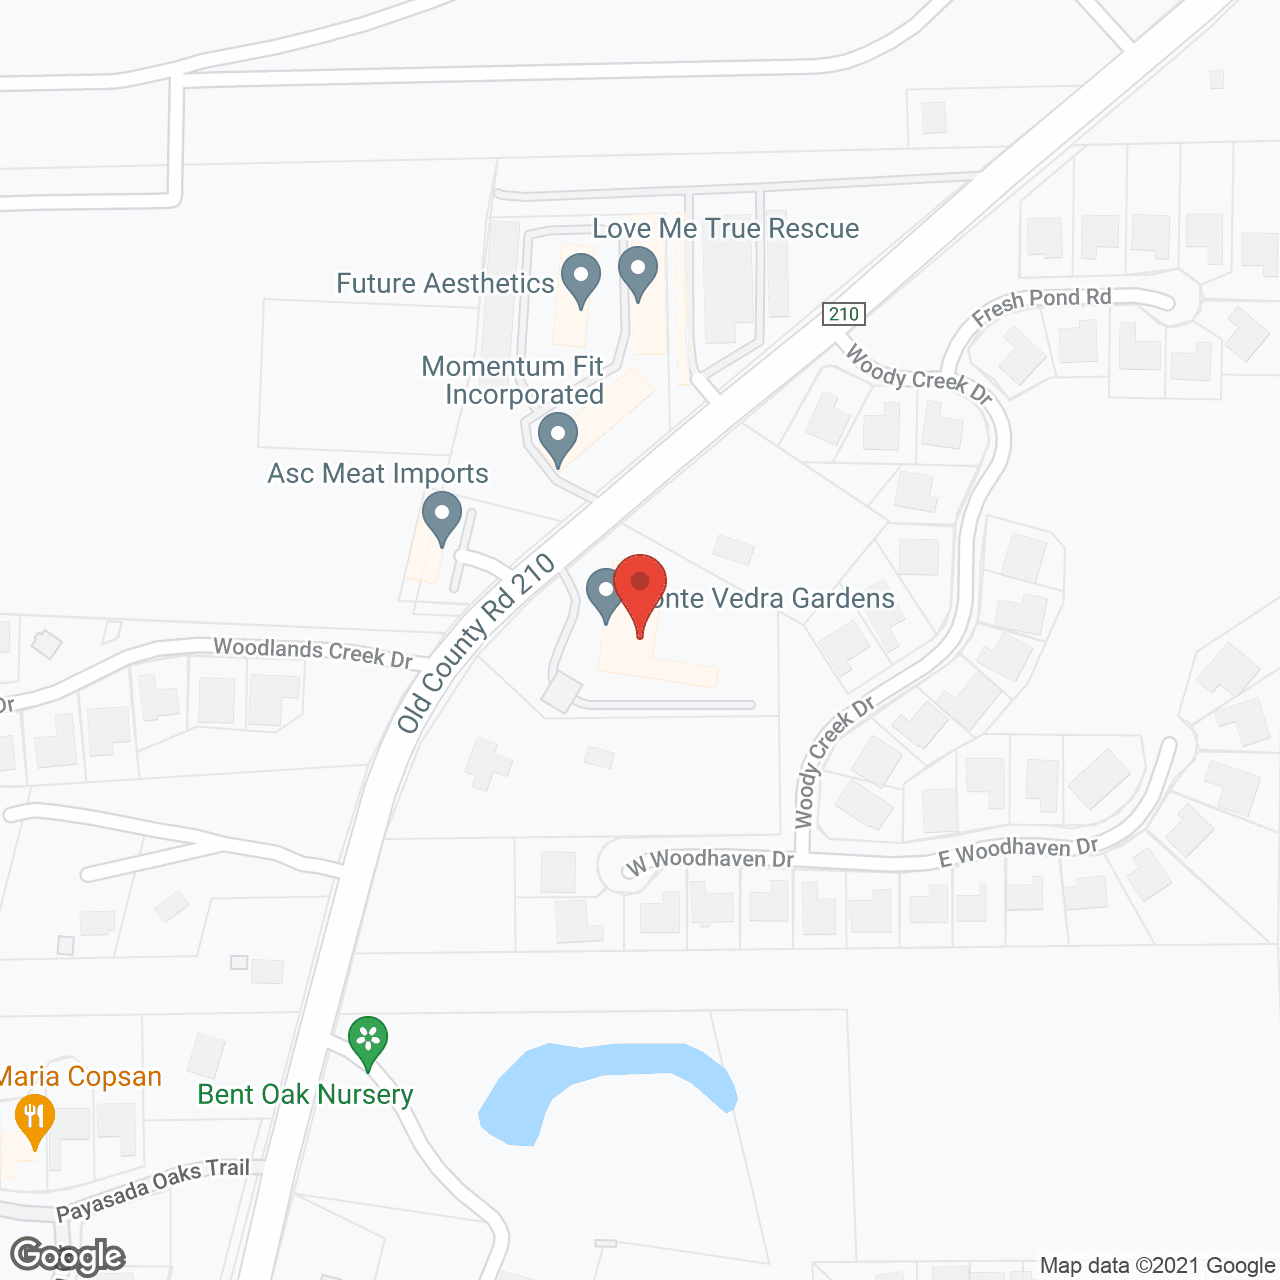 Ponte Vedra Gardens Alzheimer's Special Care Center in google map